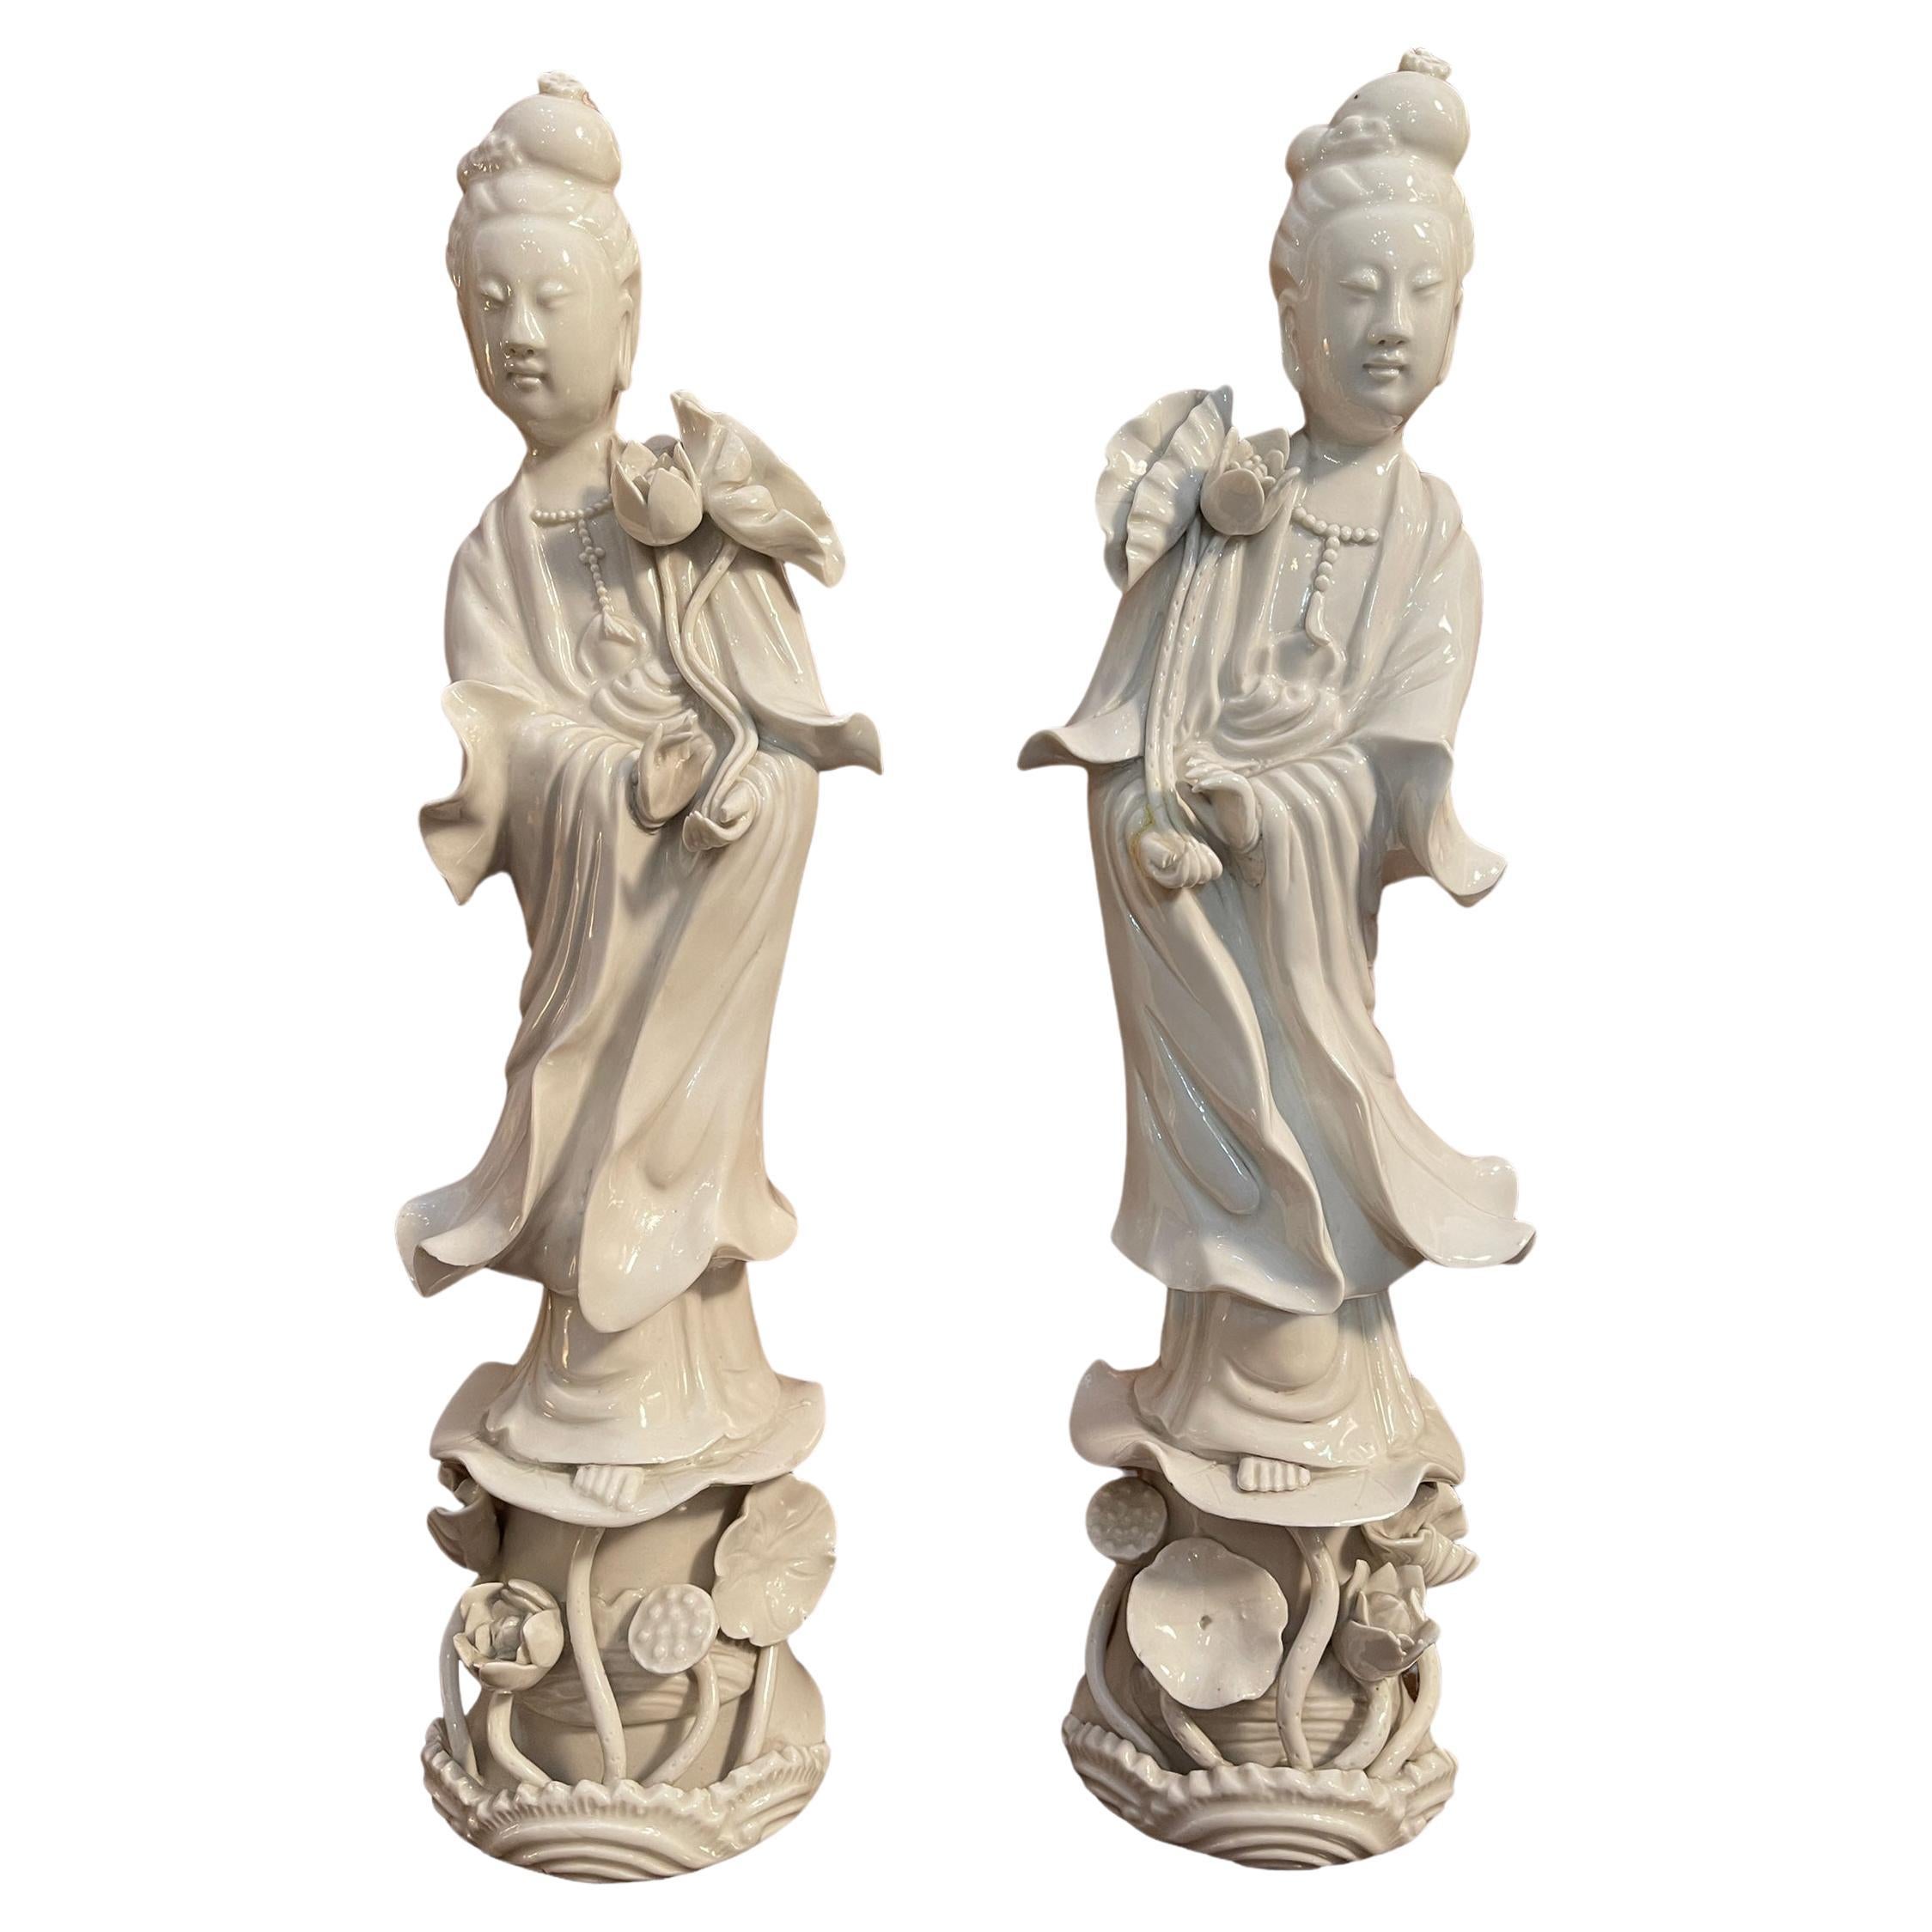 Guanyin pair, ceramic statues, China, 19th century